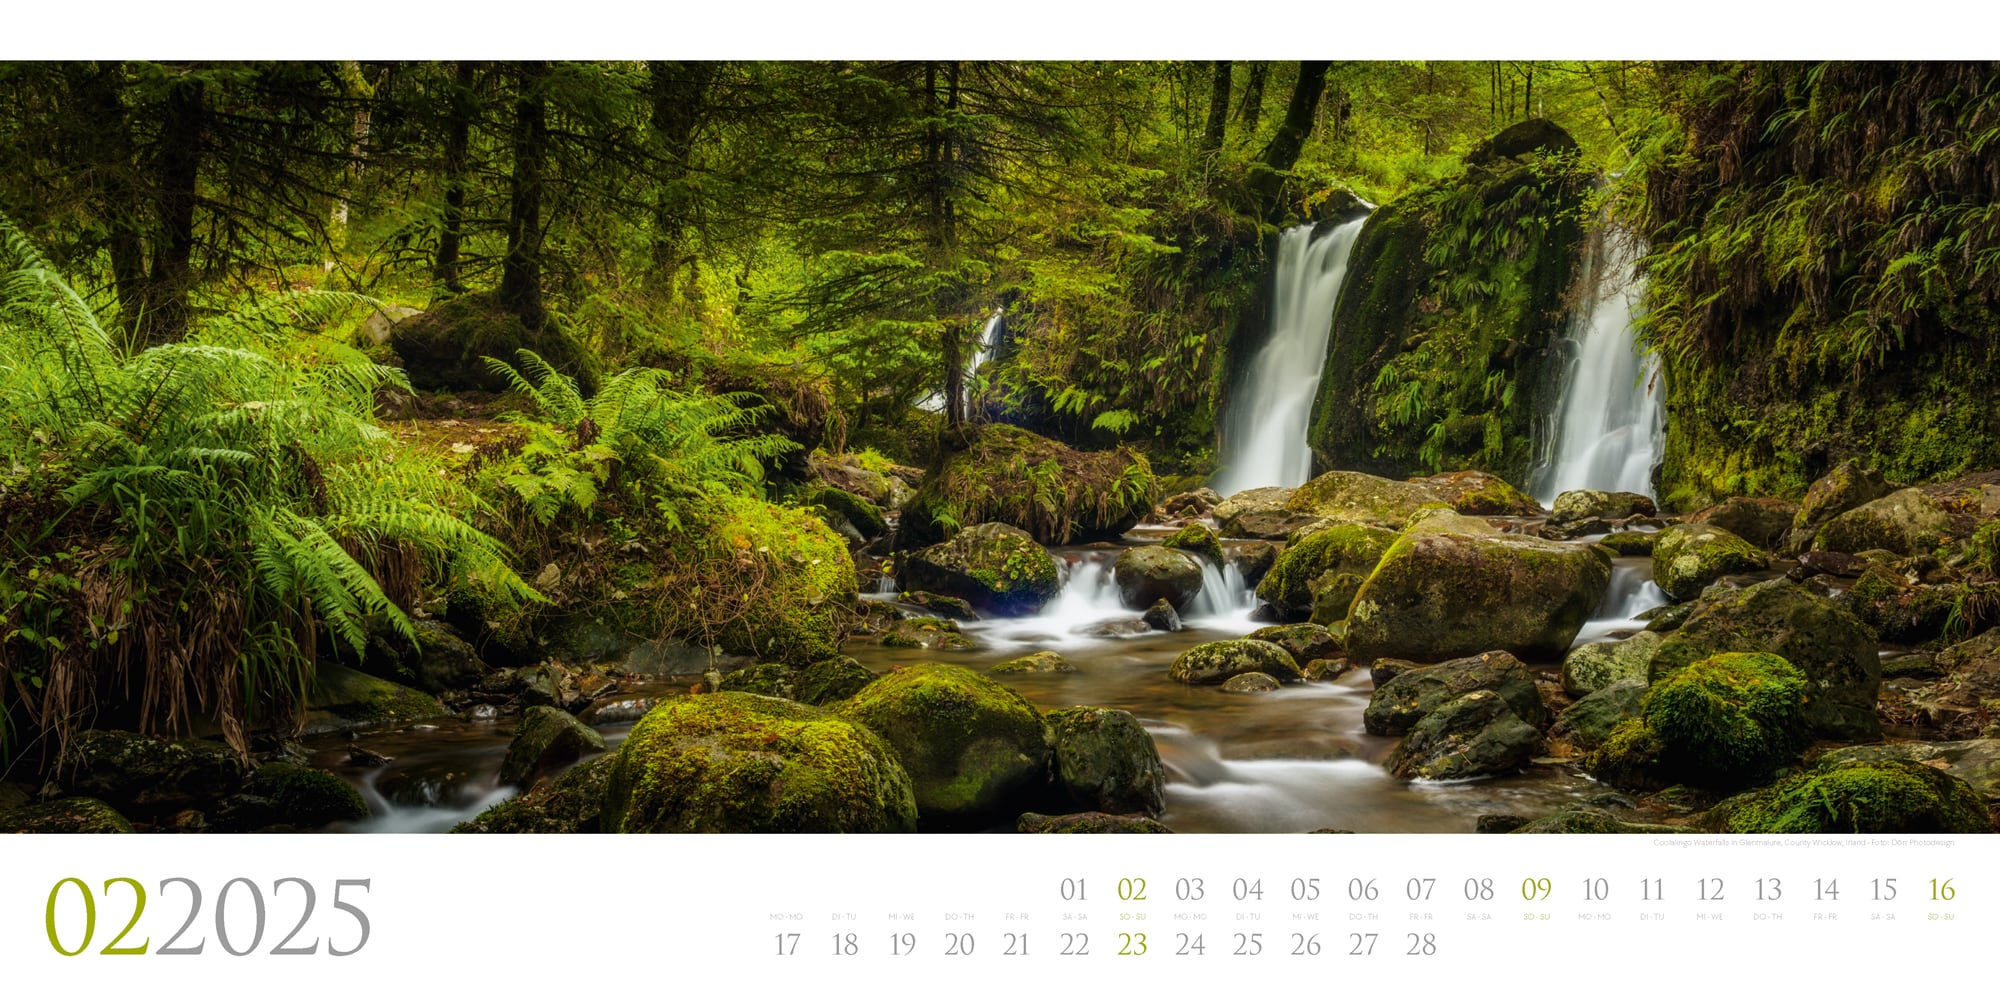 Ackermann Calendar Wild Forests 2025 - Inside View 02